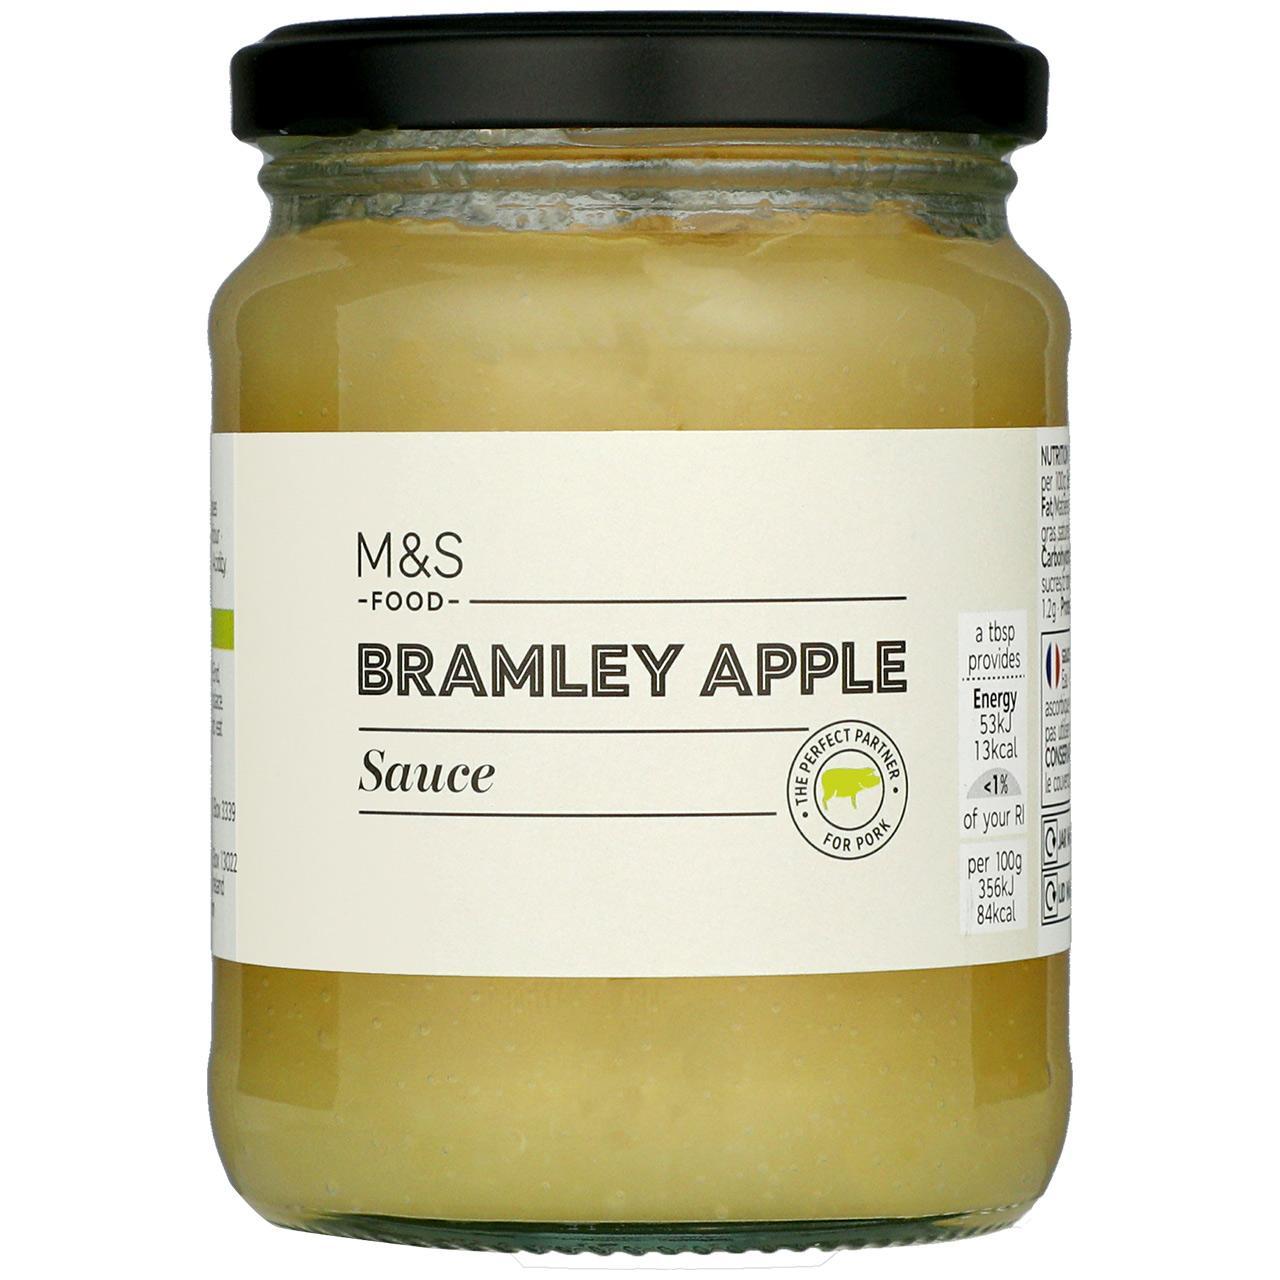 M&S Bramley Apple Sauce